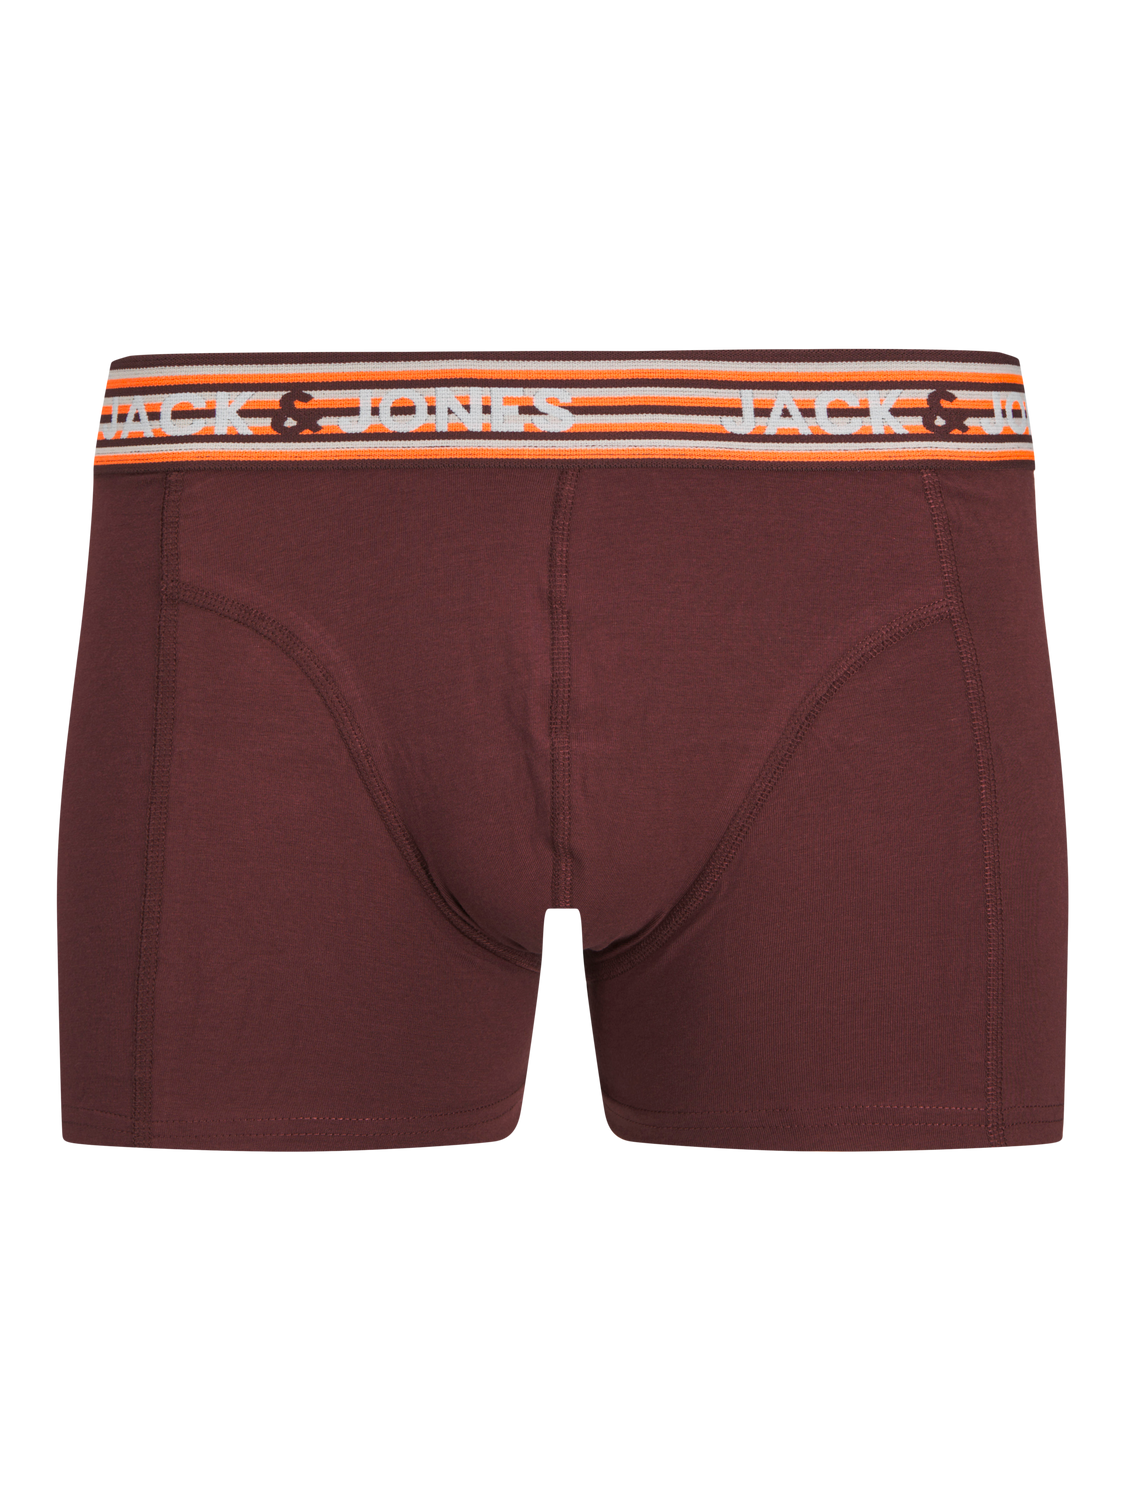 Jack & Jones 3-pack Boxers -Kombu Green - 12260070